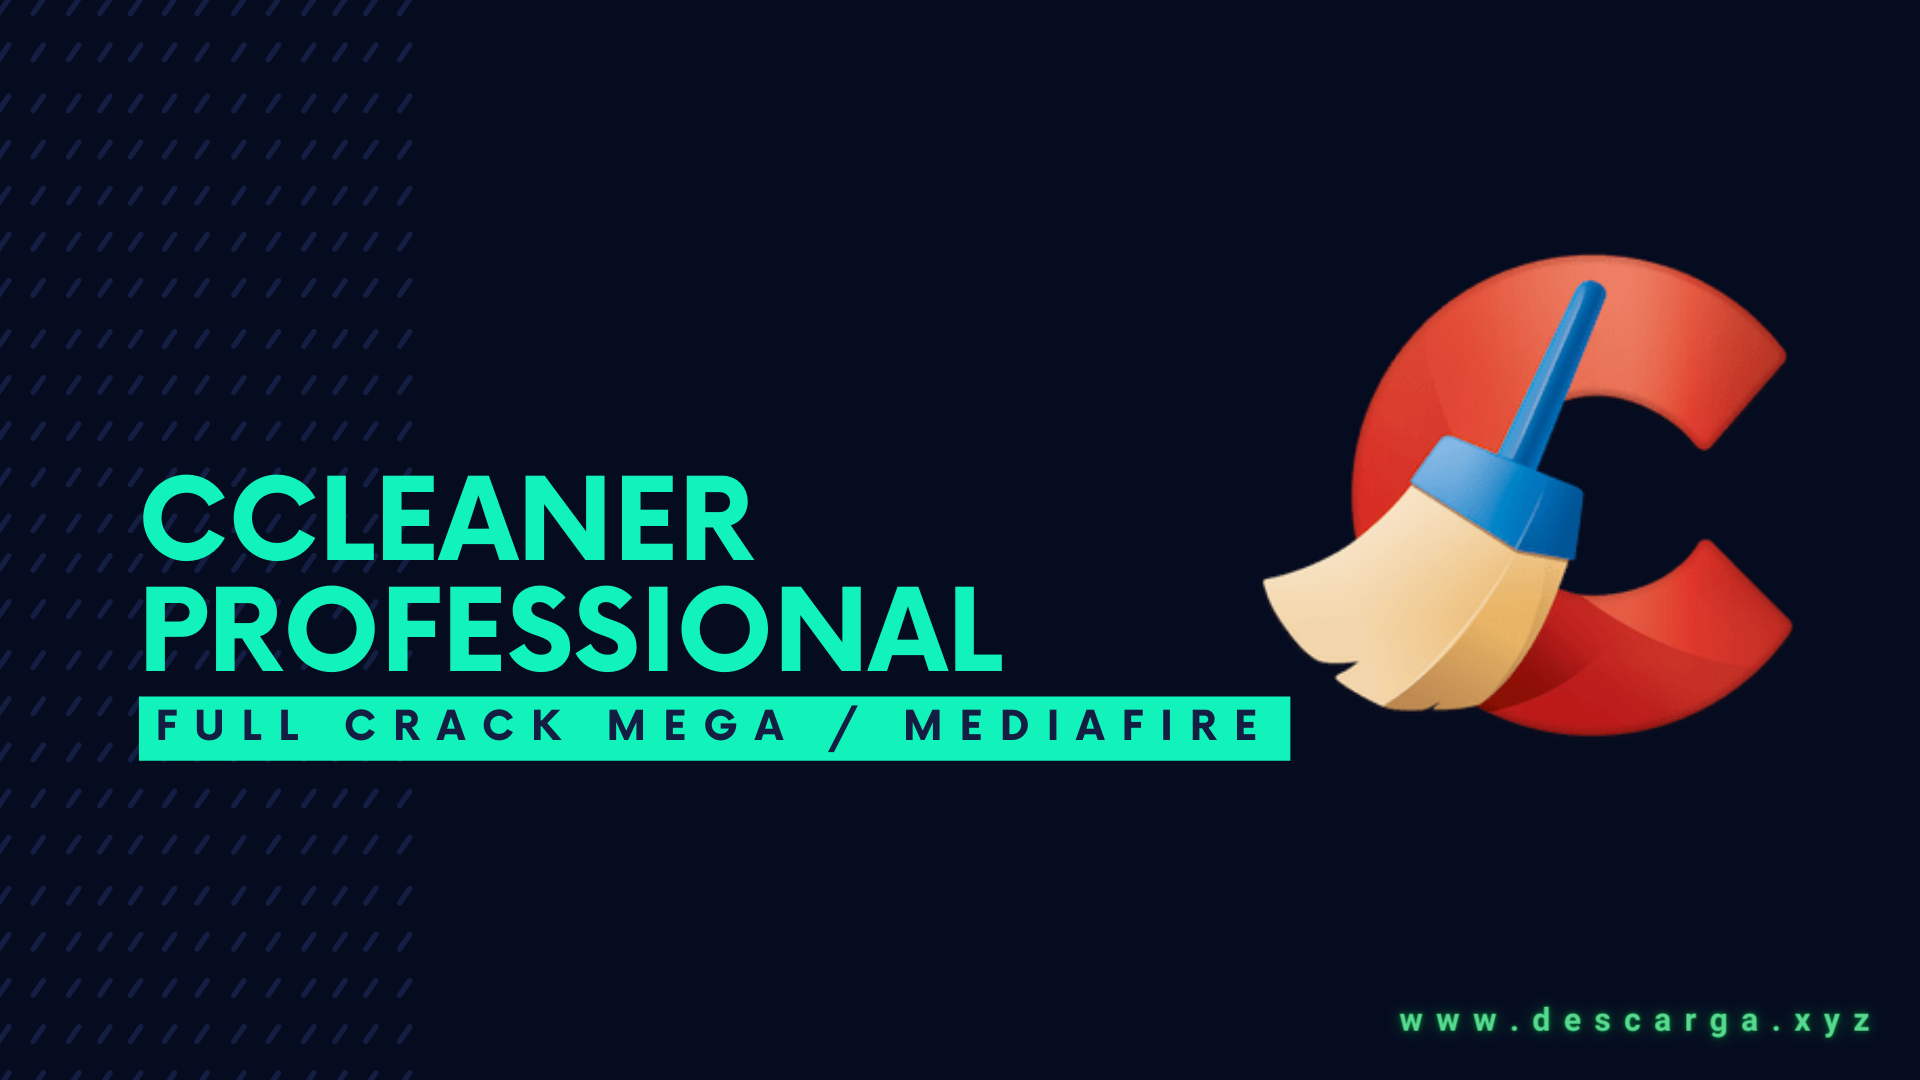 CCleaner Professional Full descarga Crack download, free, gratis, serial, keygen, licencia, patch, activado, activate, free, mega, mediafire